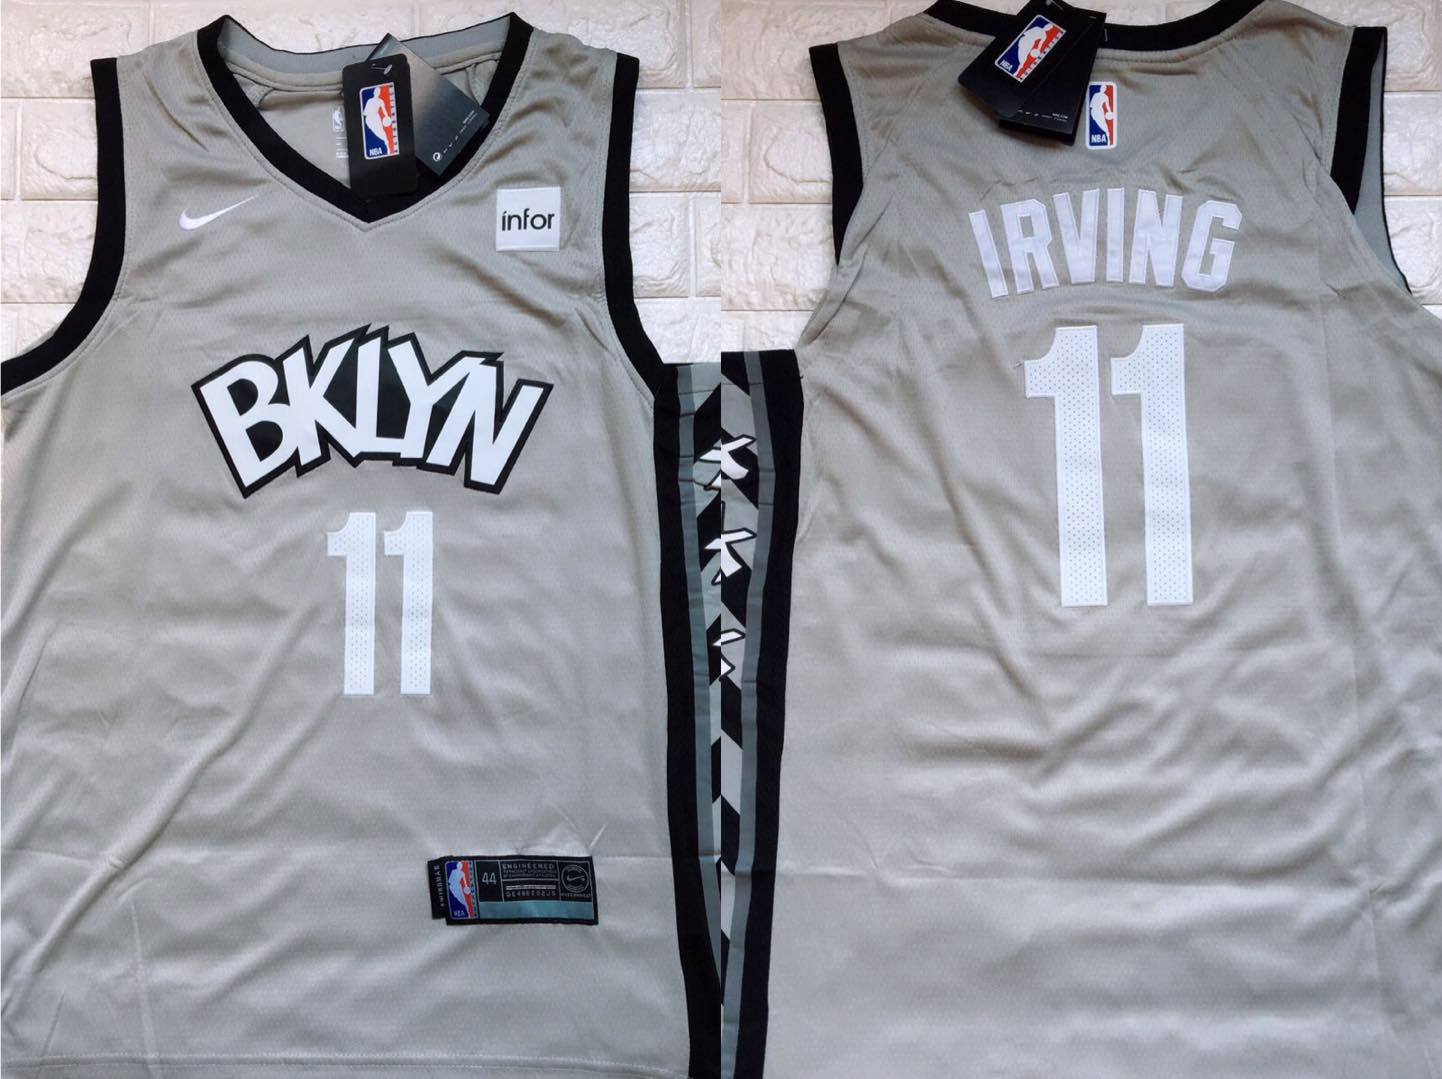 Brooklyn #11 IRVING basketball jersey 